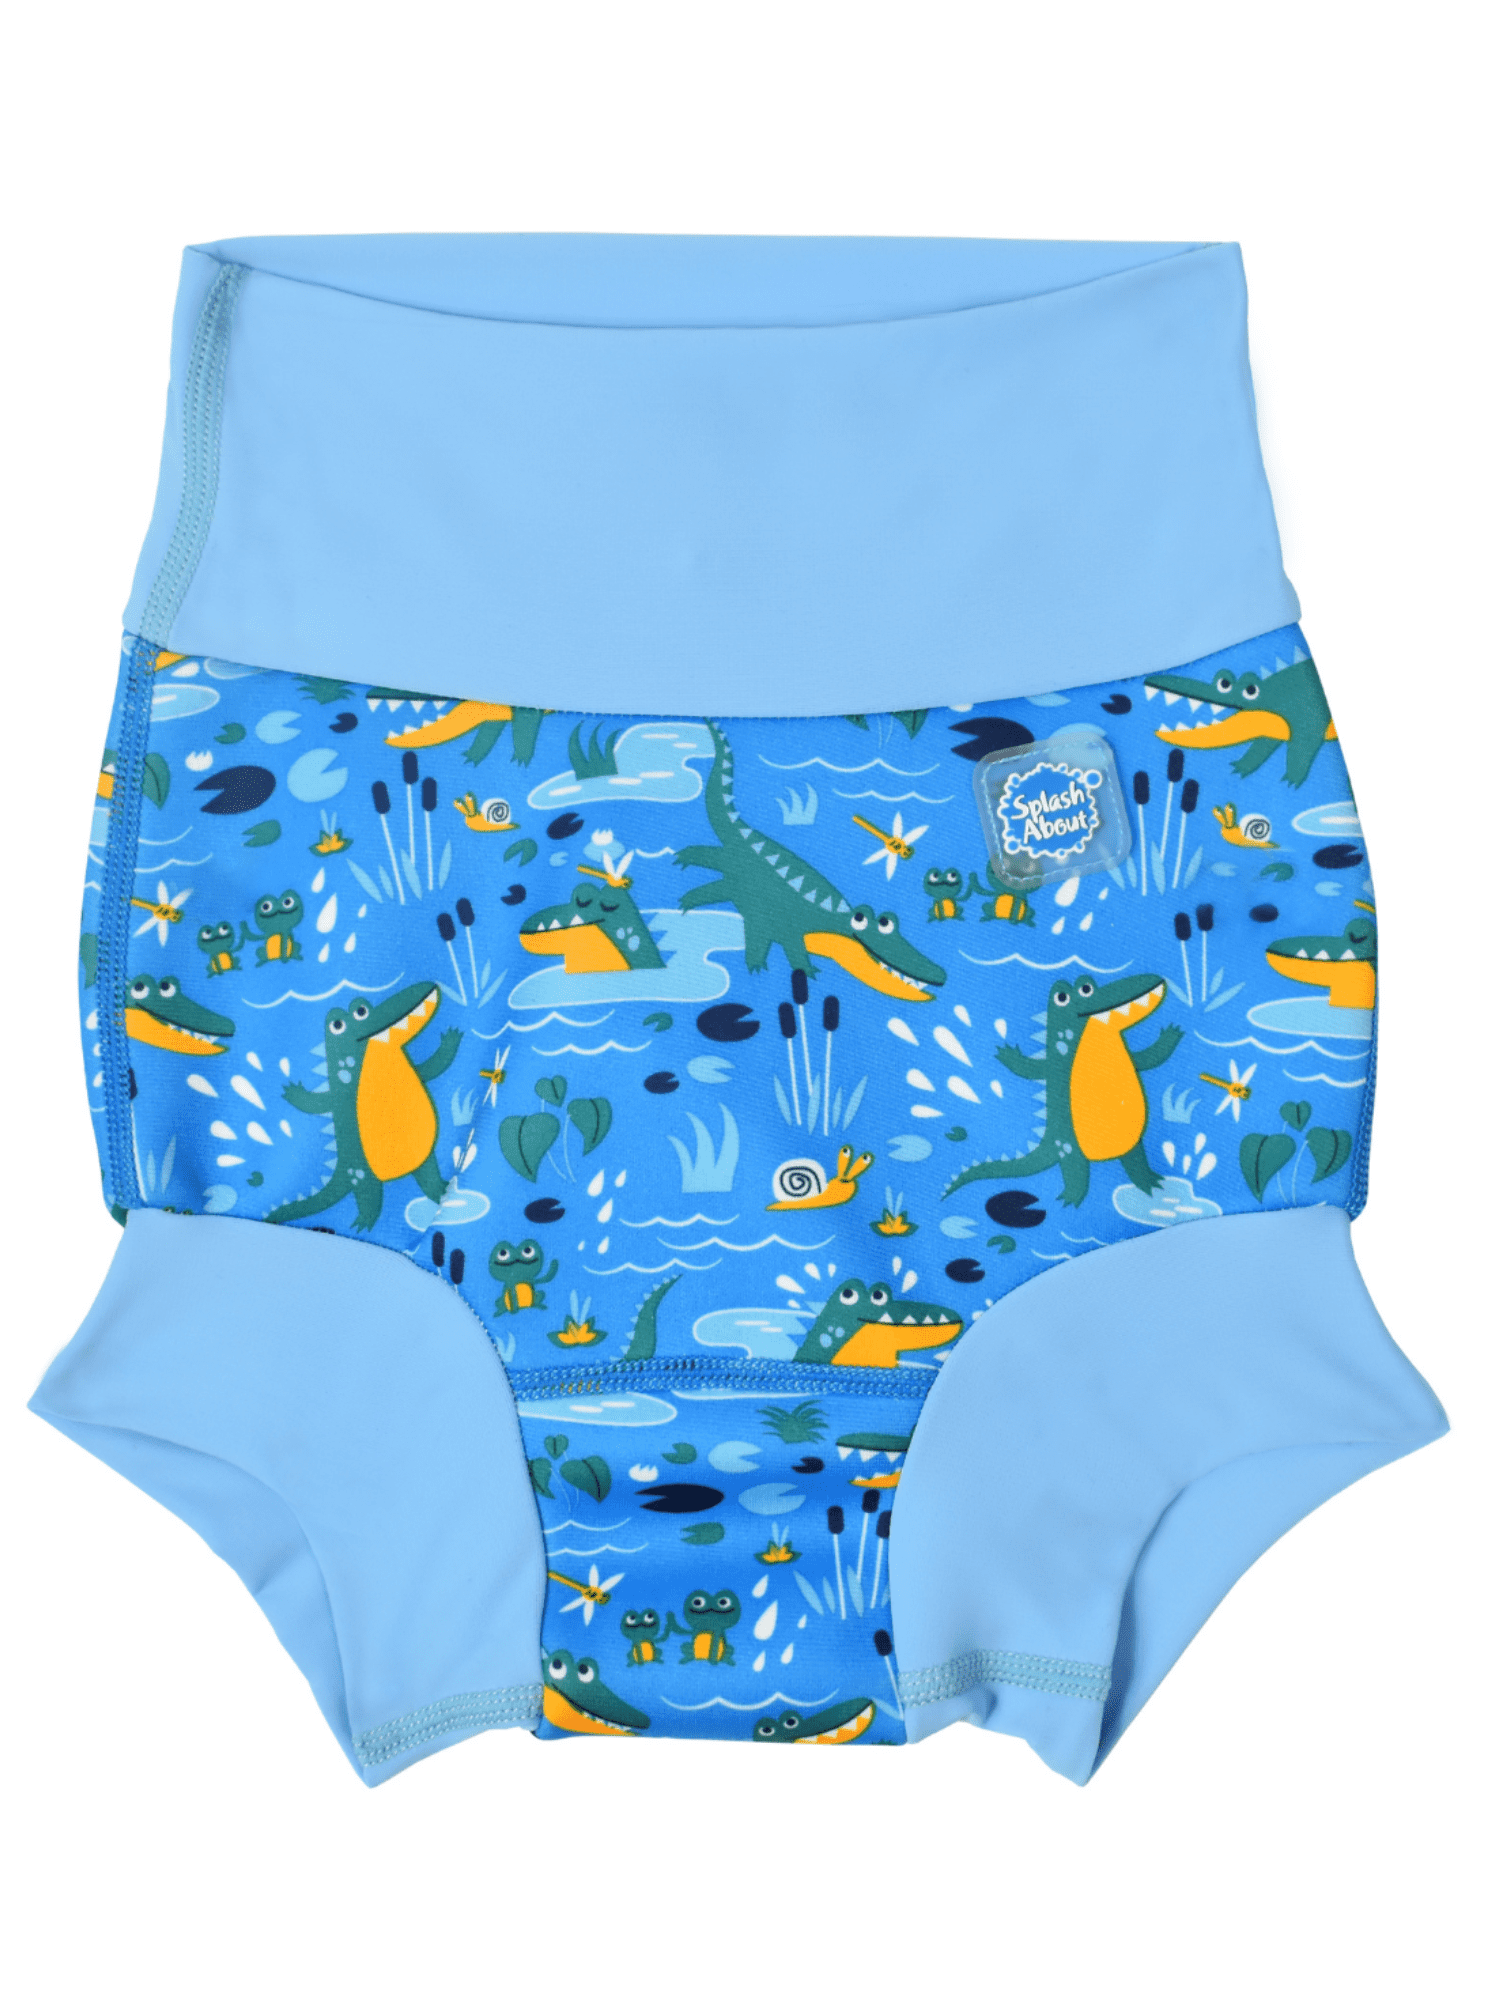 Splash About Boy's Happy Nappy Cloth Swim Diaper, Crocodile Swamp, 2-3 Years